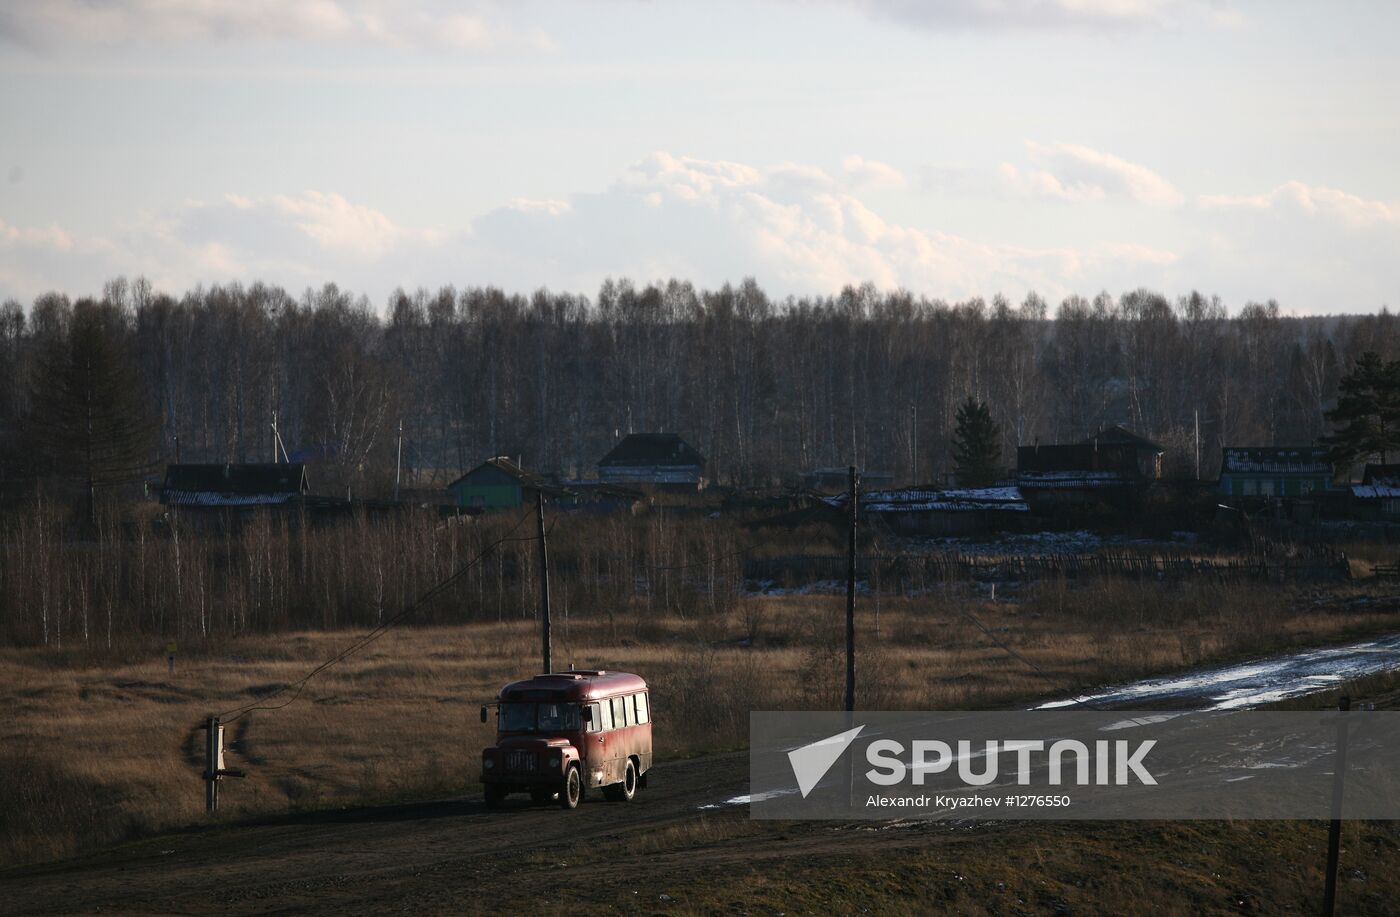 Village life in Novosibirsk region